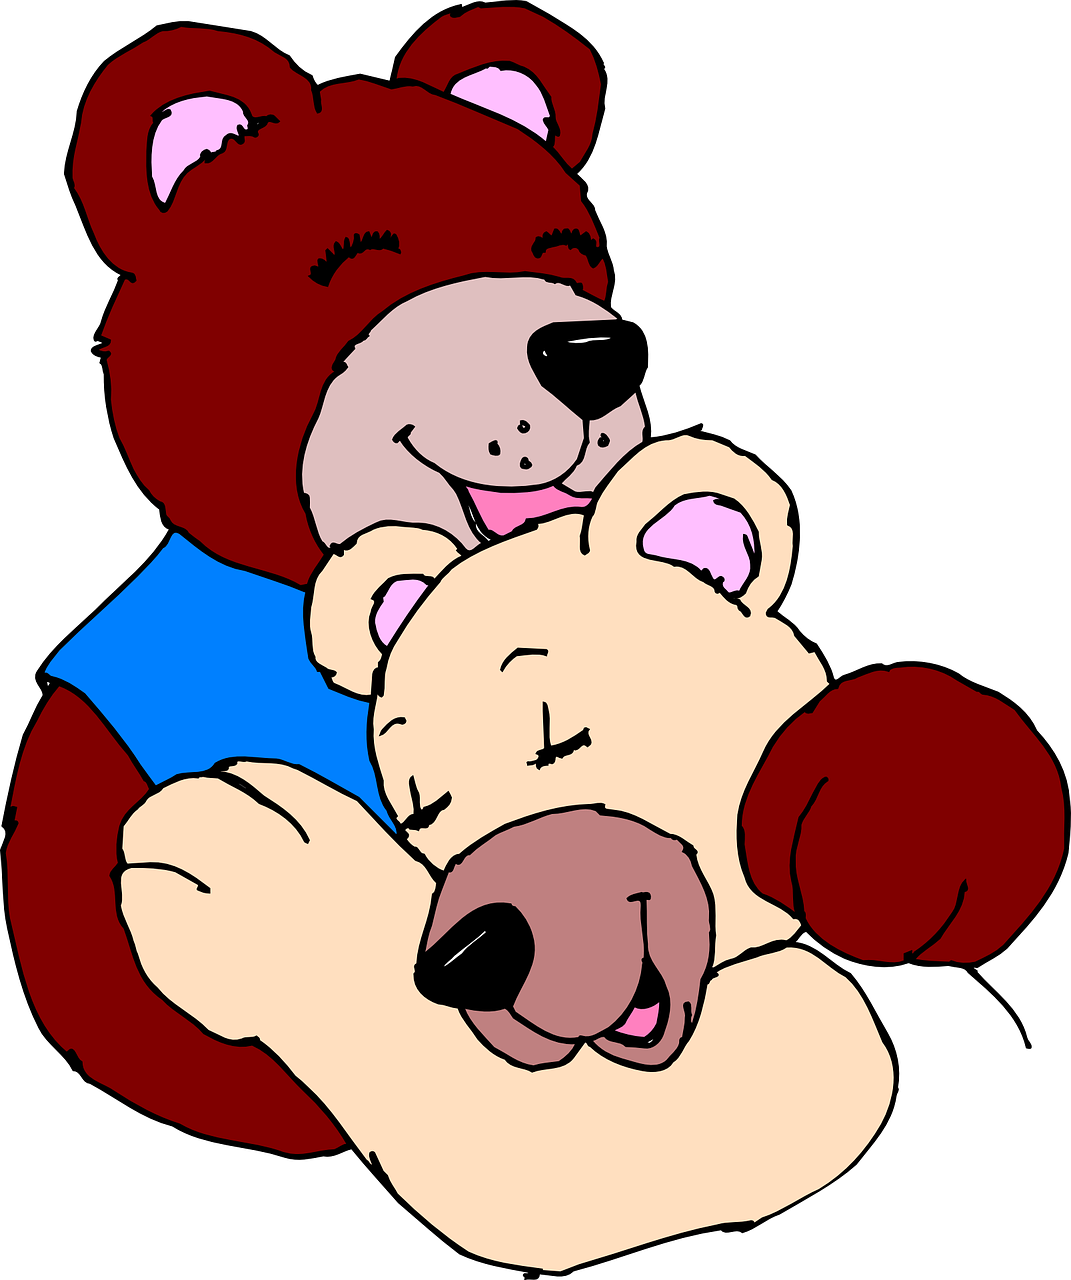 Affectionate Bear Hug PNG image